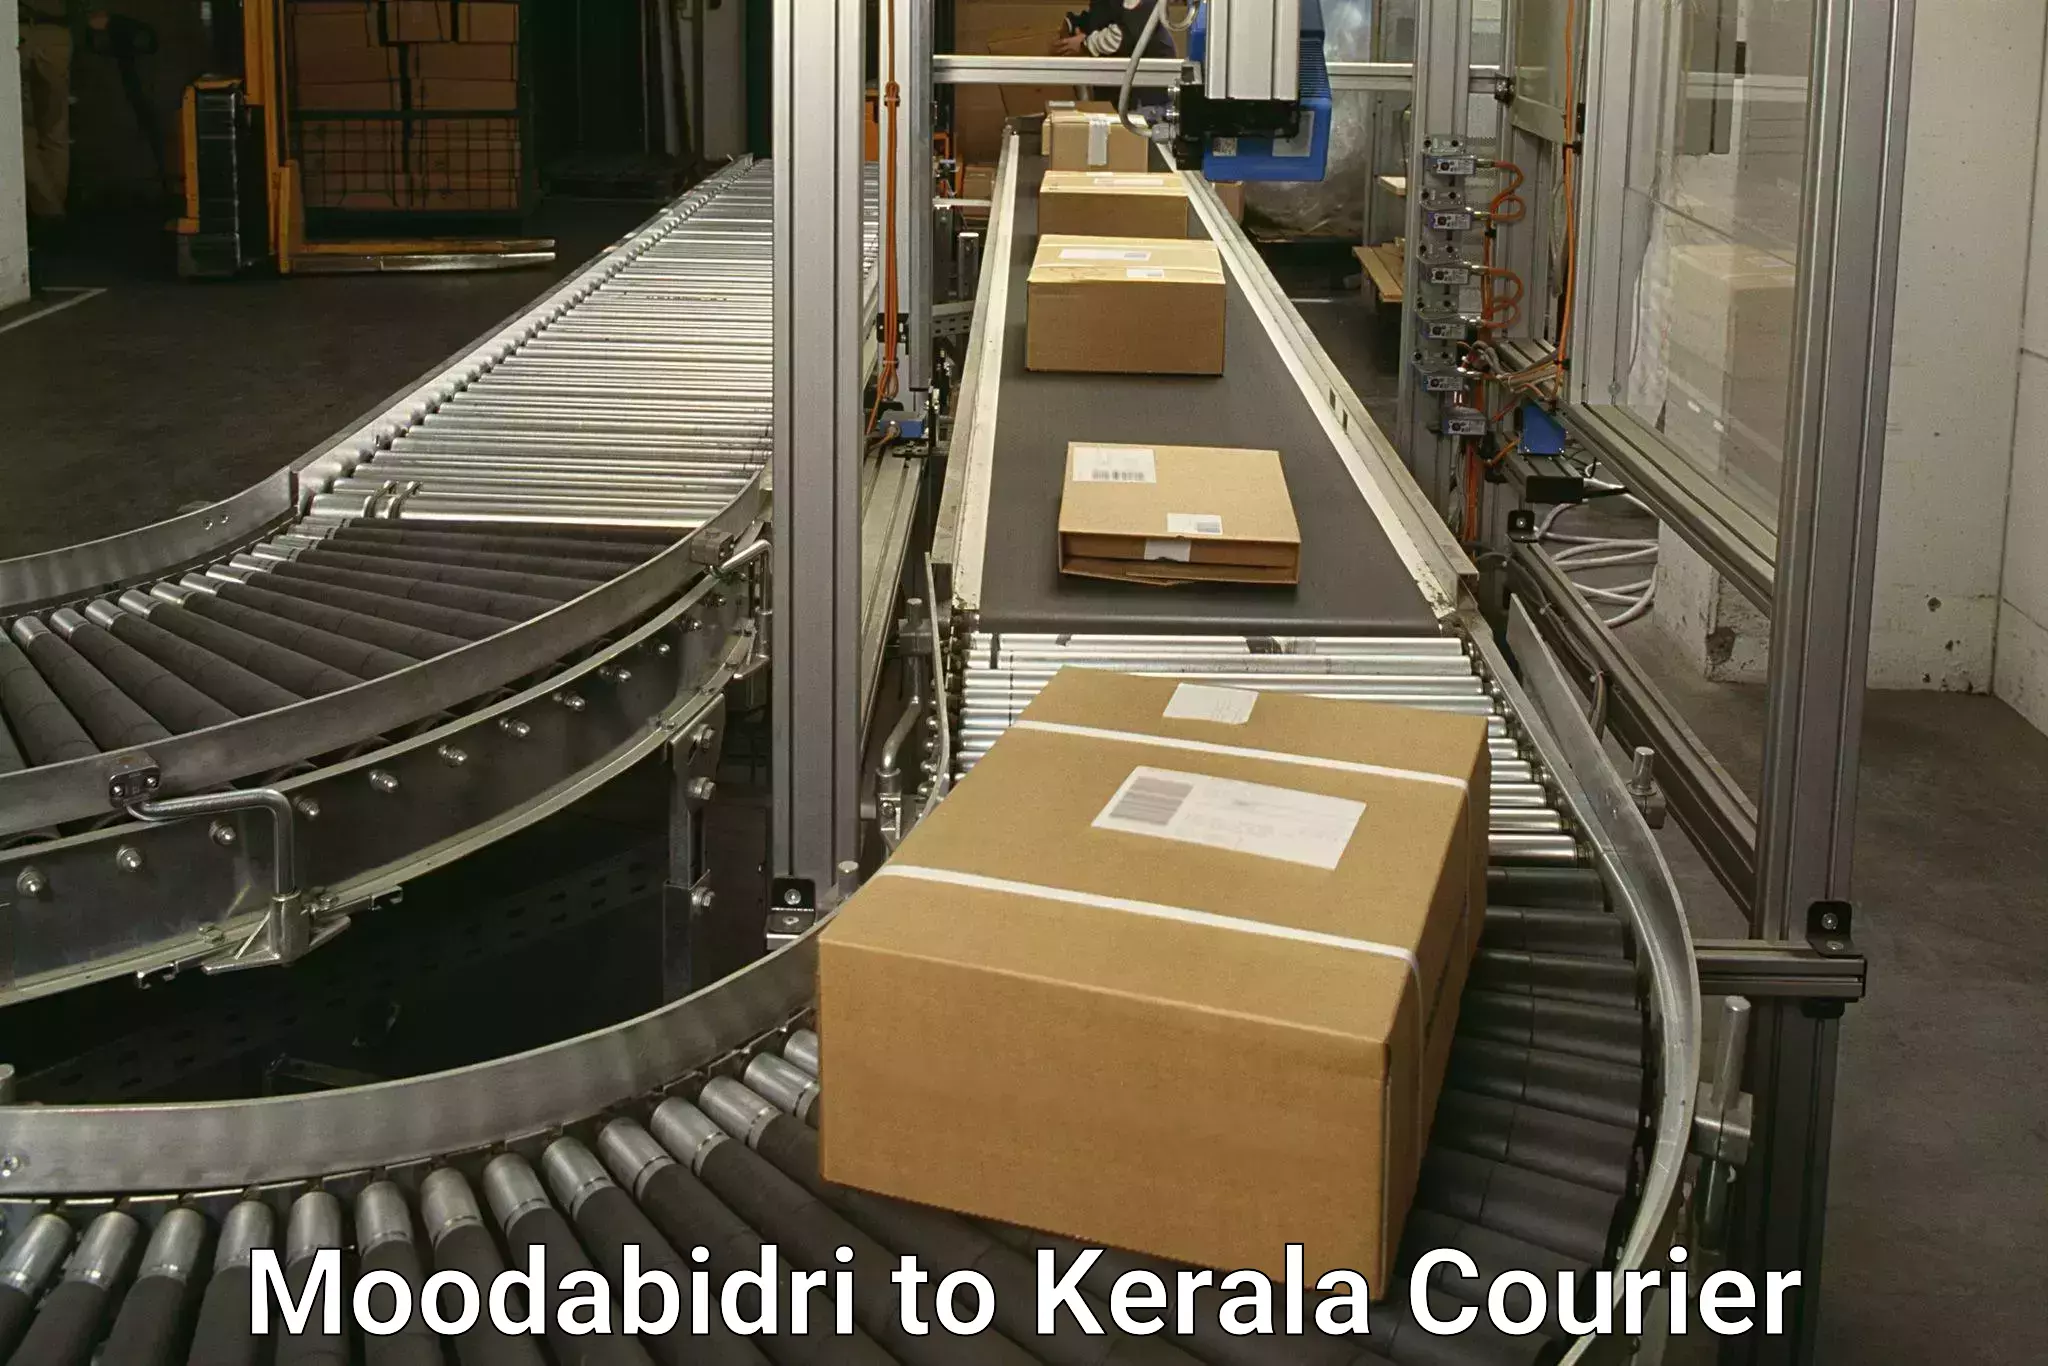 Ground shipping Moodabidri to Cochin Port Kochi